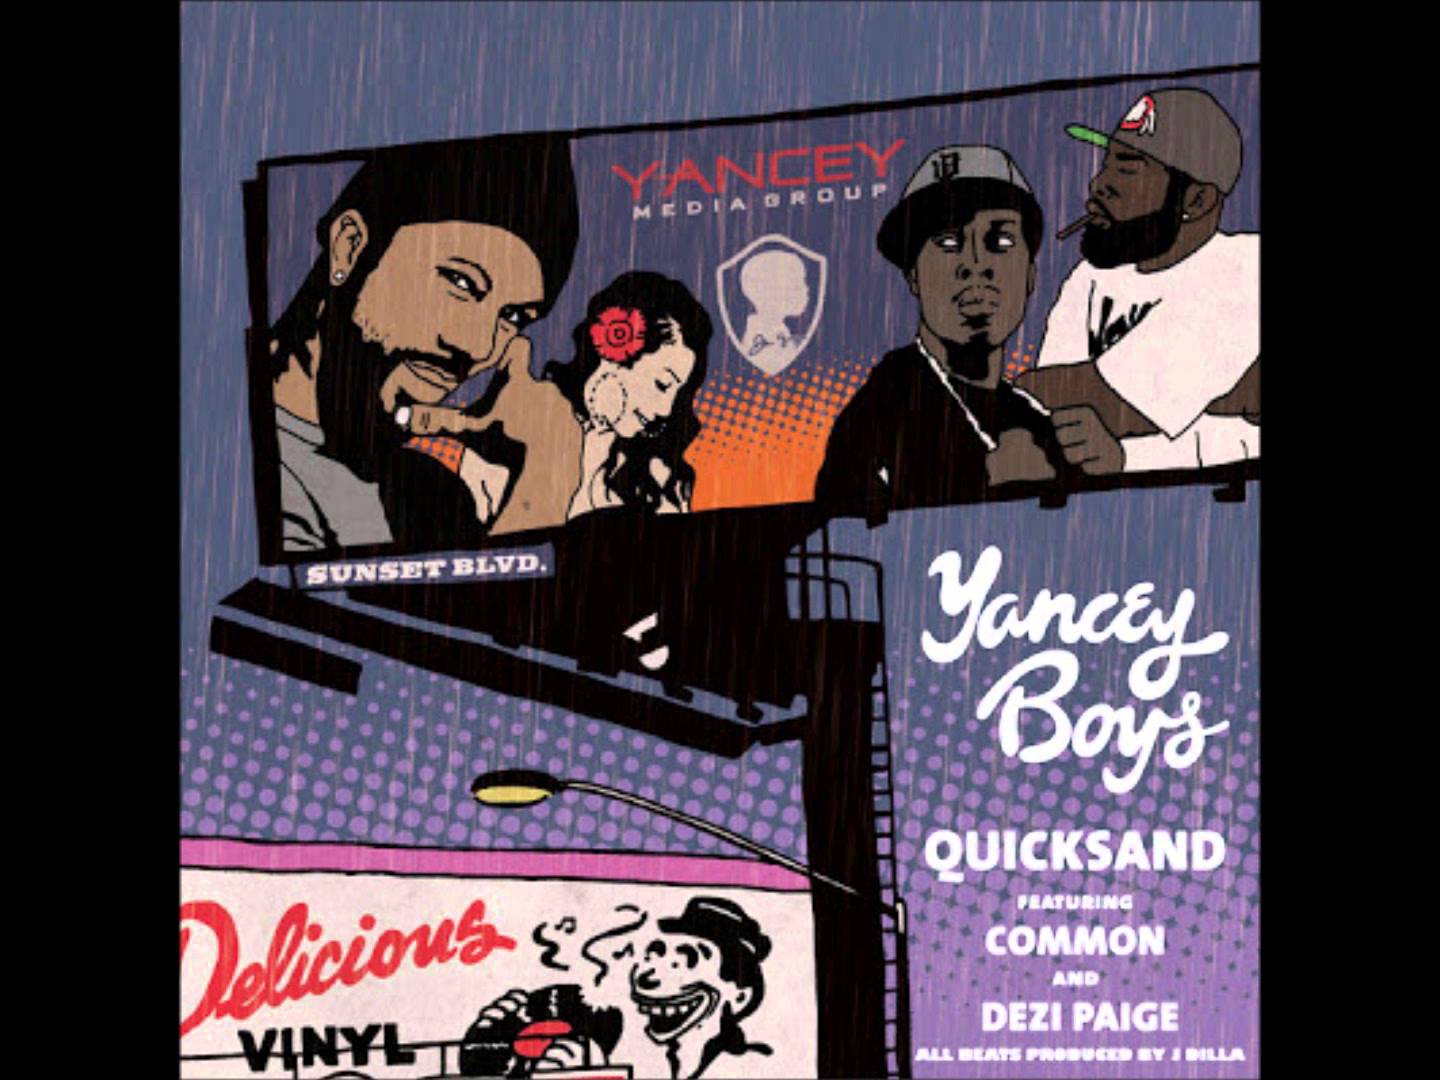 Yancey Boys ft. Common & Dezi Paige "Quicksand" Video | @illaj @Franknitt @1DEZIPAIGE @common